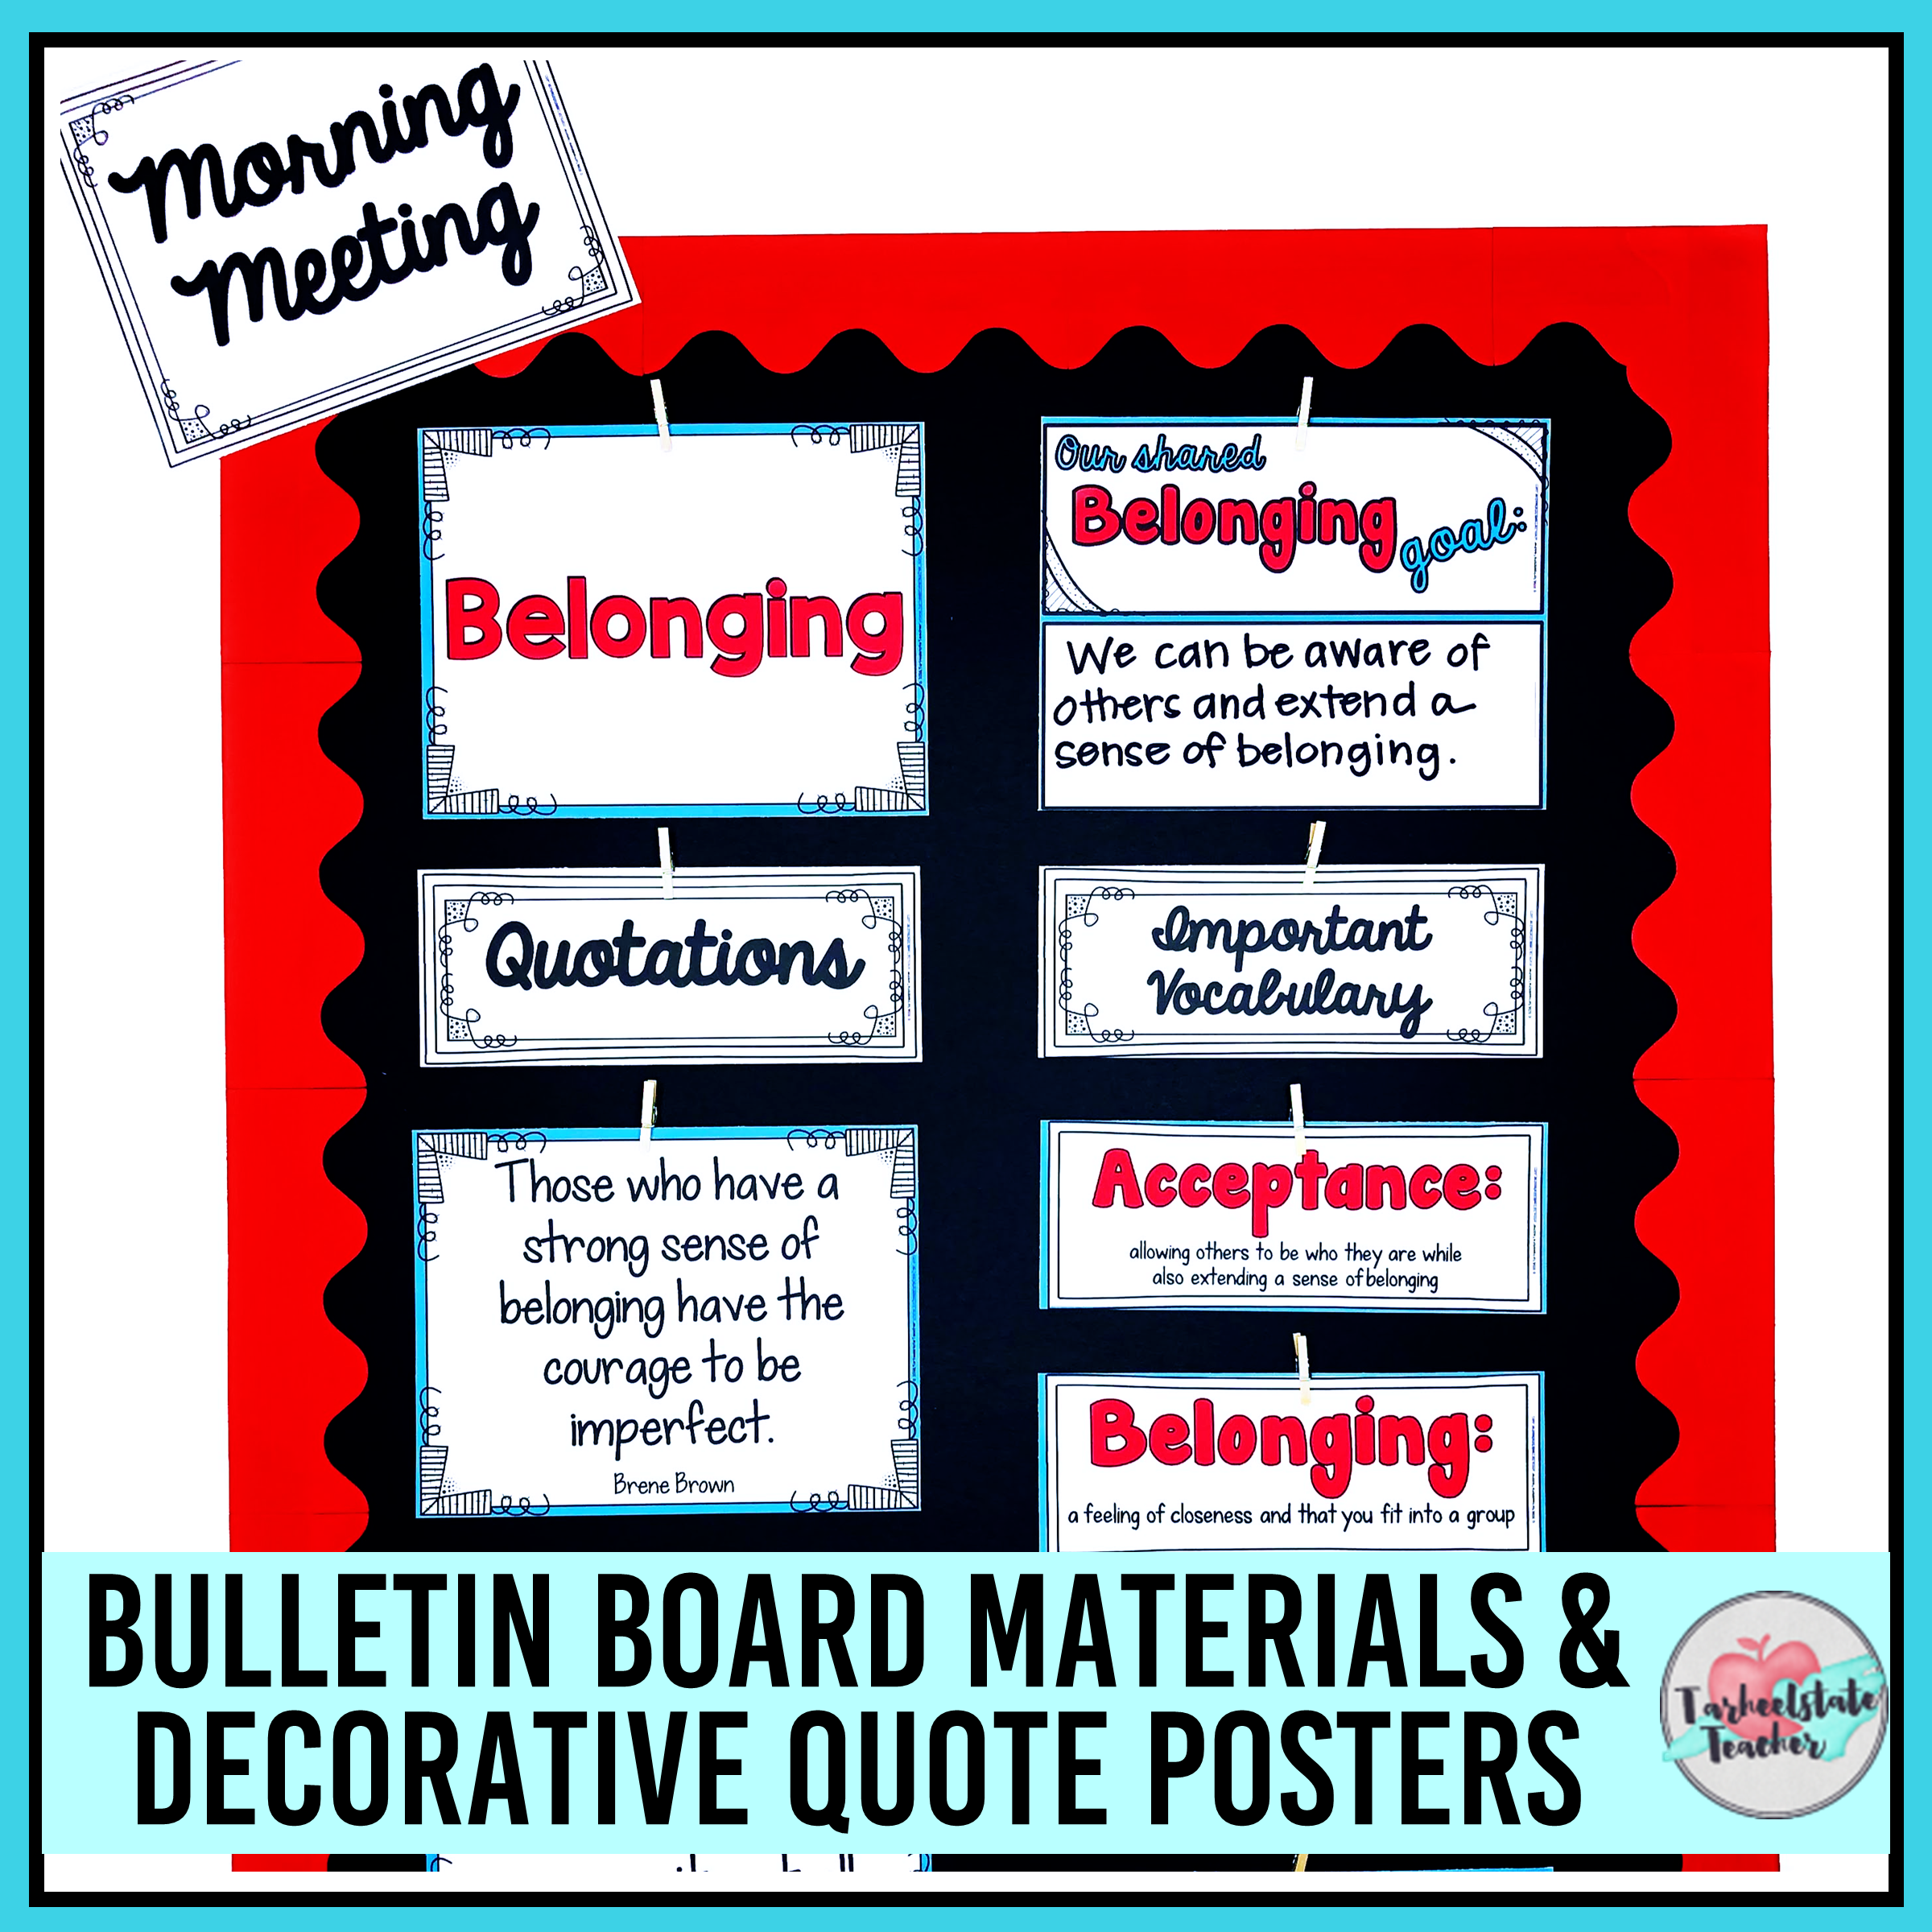 morning meeting bulletin board - belonging (Copy) (Copy) (Copy) (Copy)